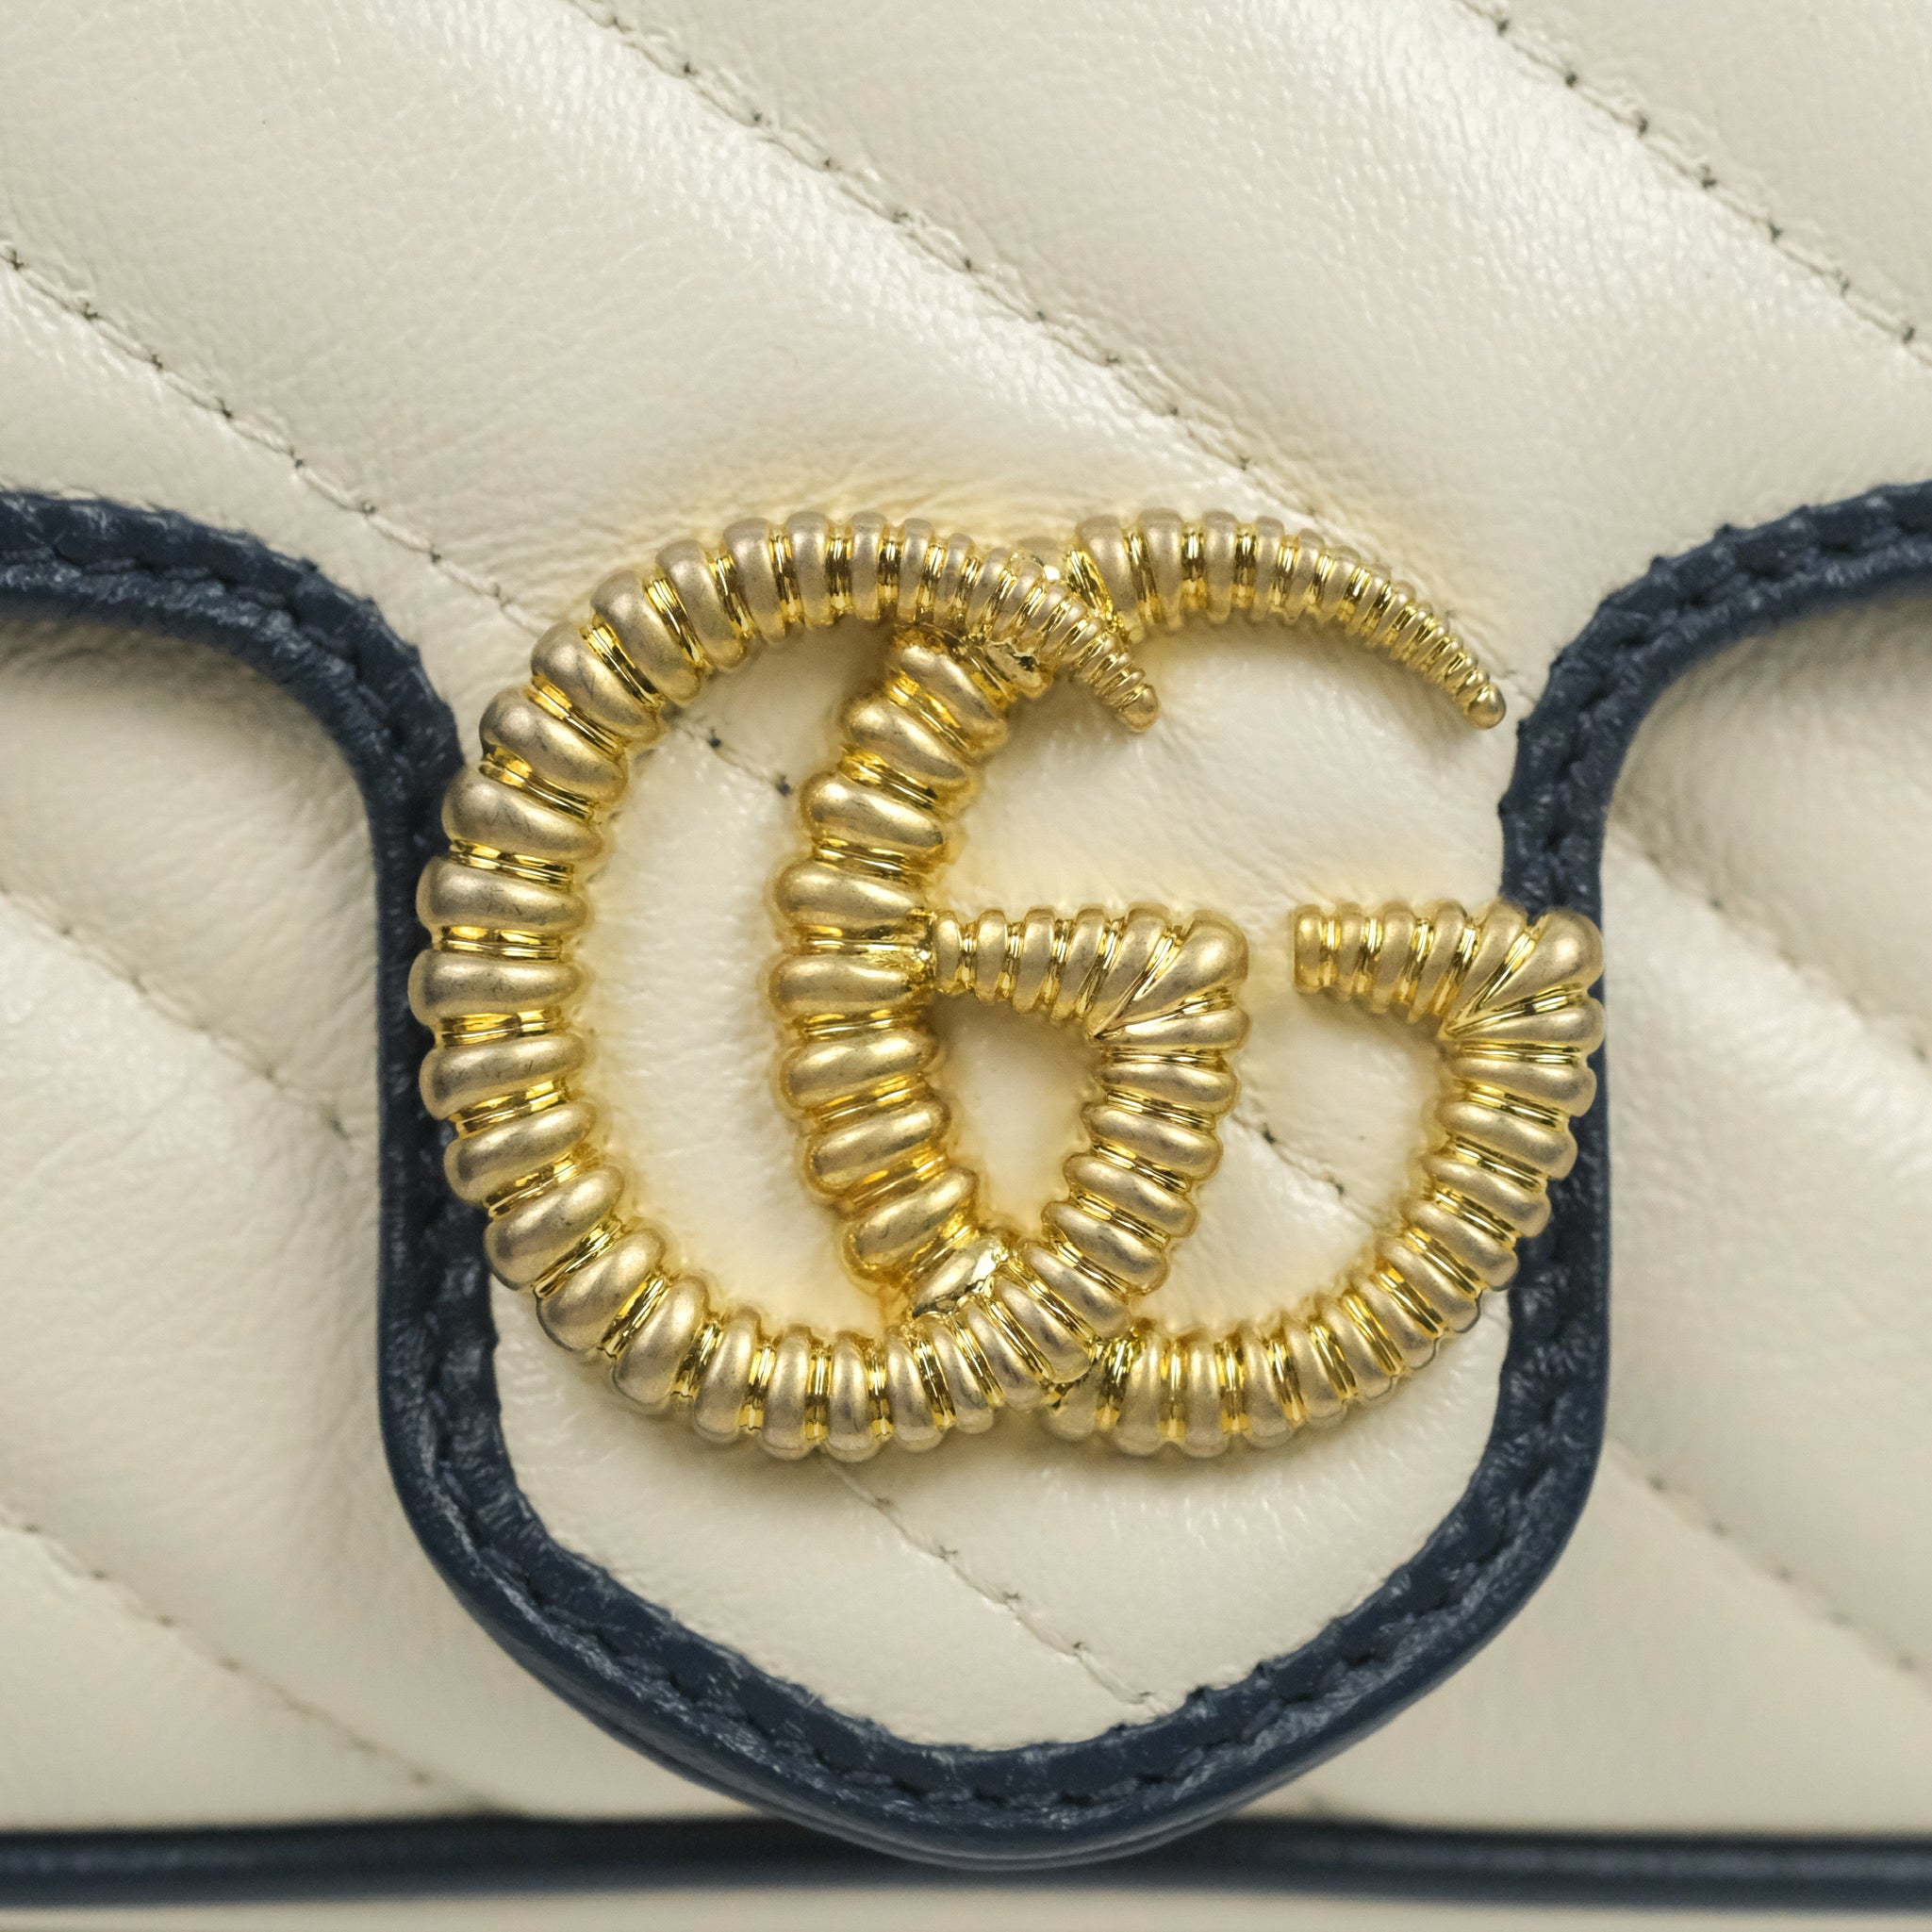 GG Marmont matelassé mini shoulder bag in white leather